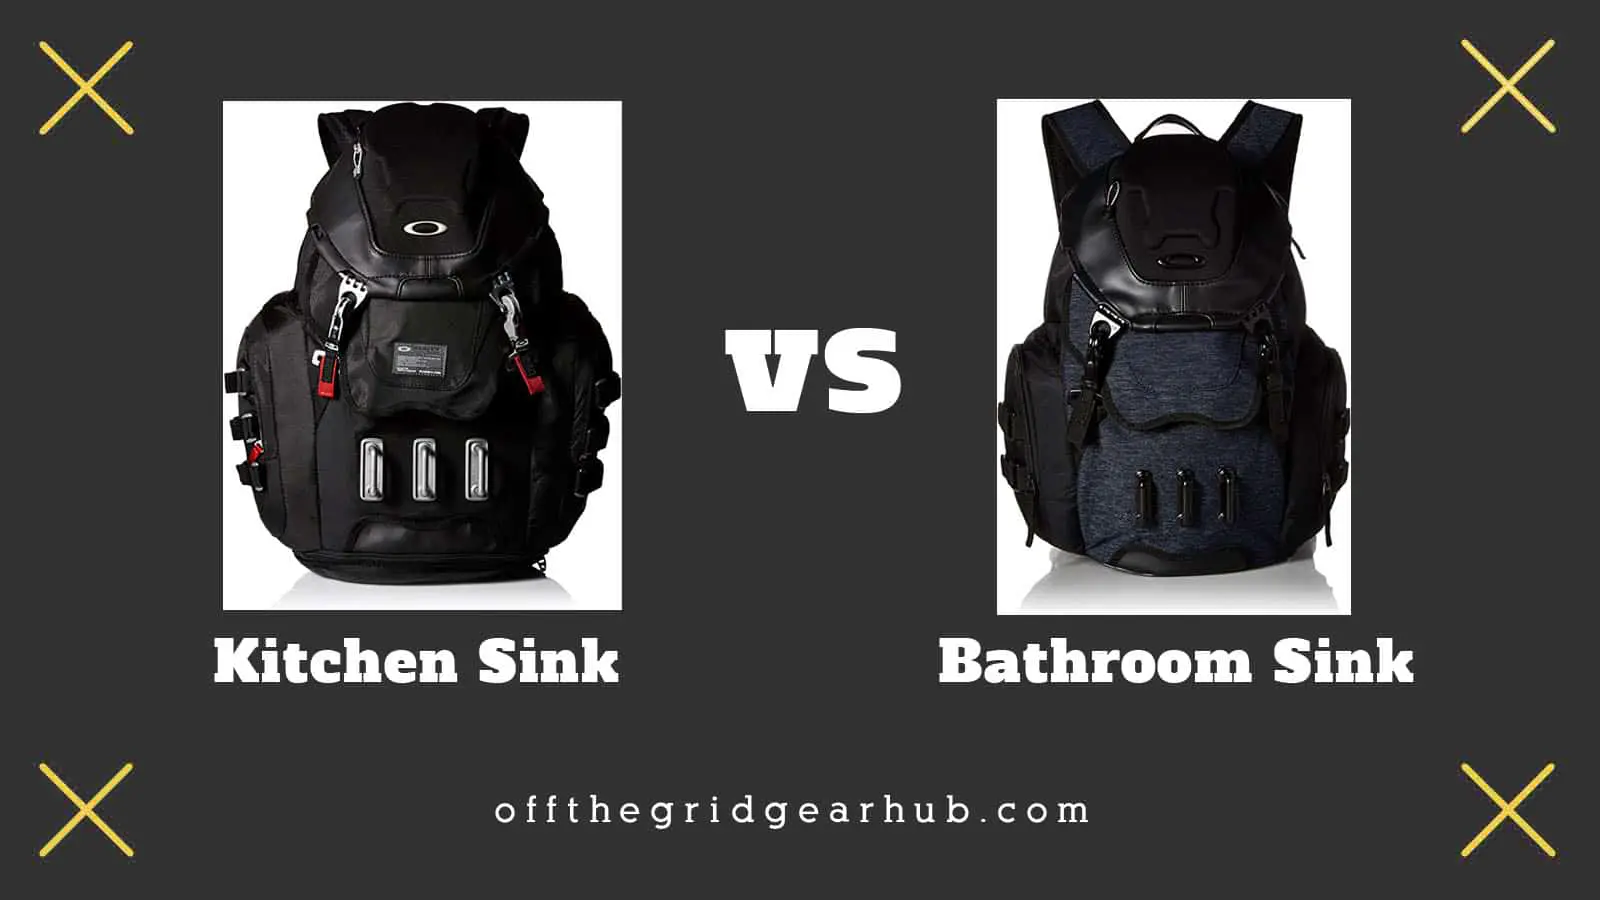 oakley bathroom vs kitchen sink vs big kitchen sink